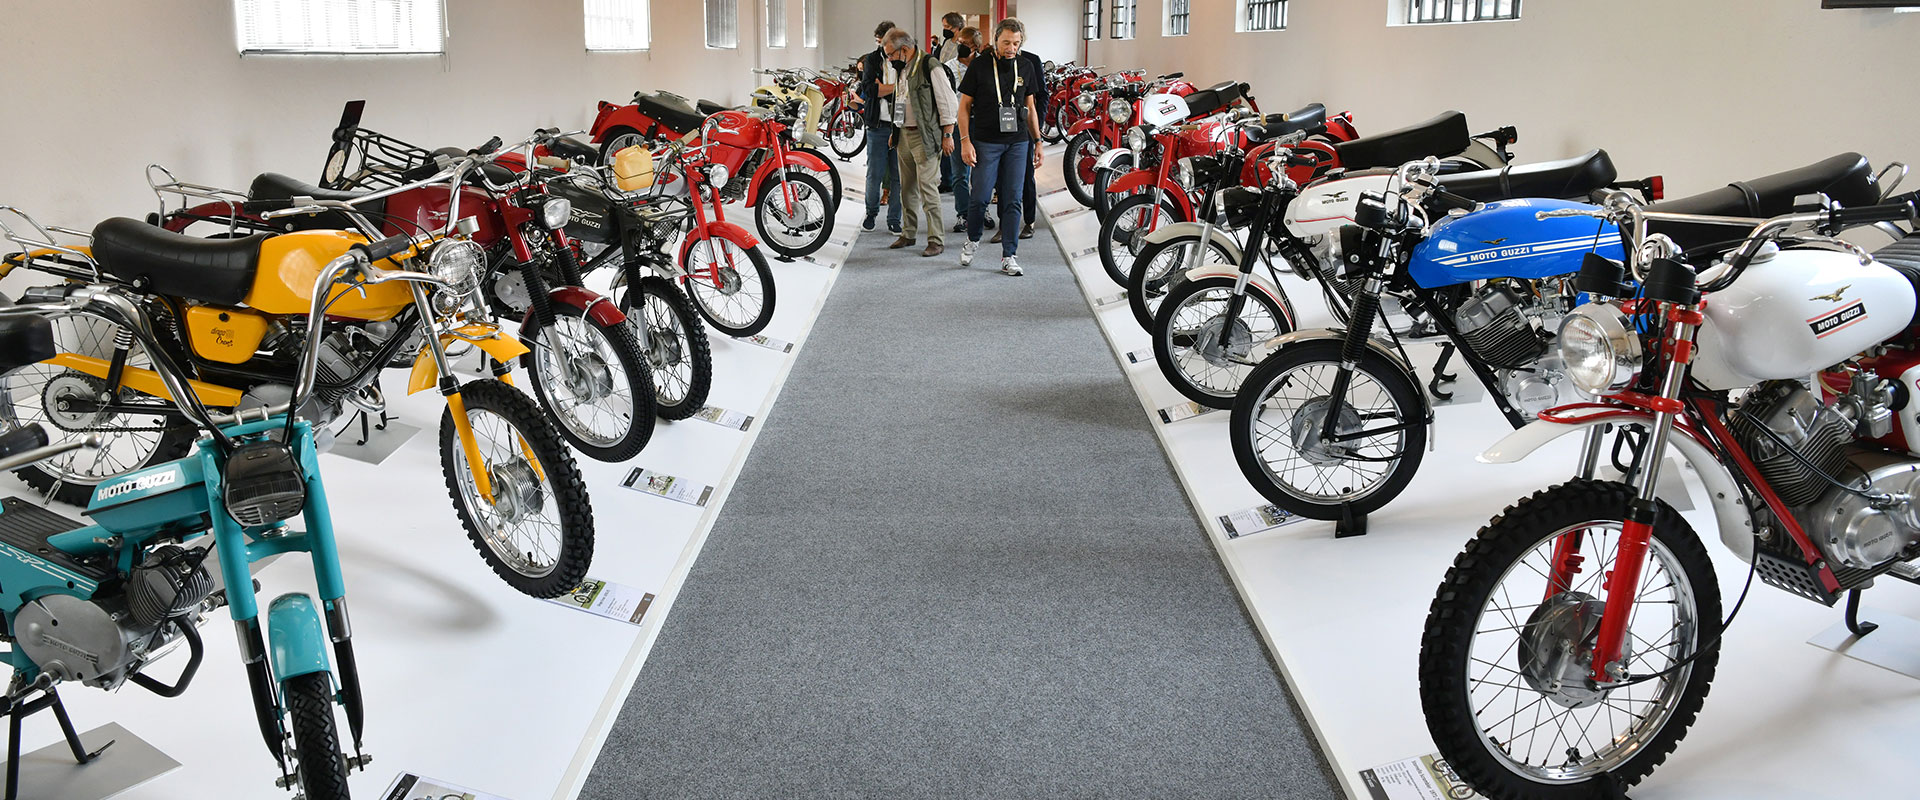 Moto Guzzi Museum: opening hours and address